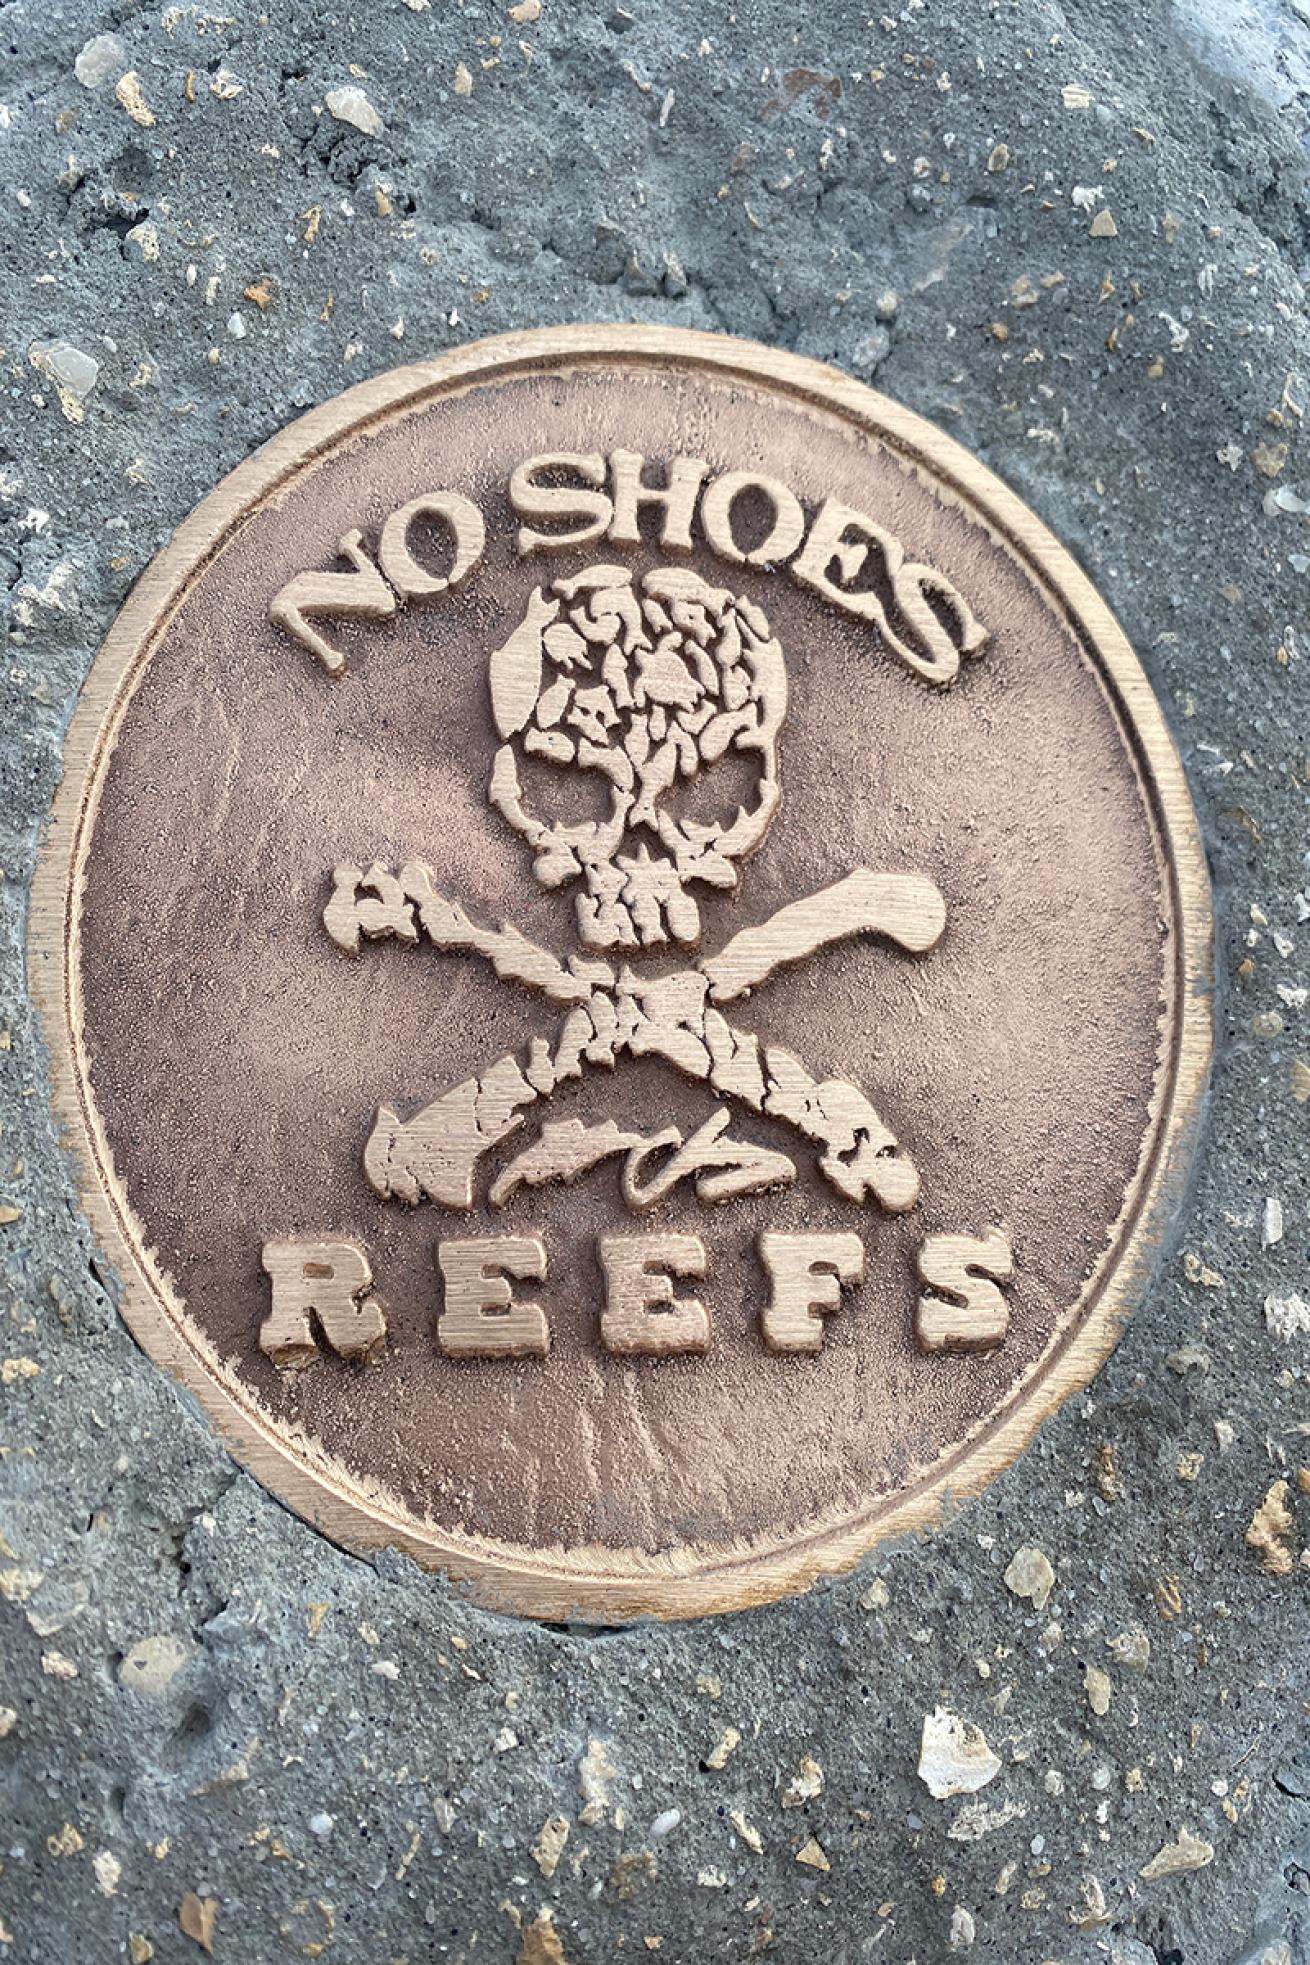 No Shoes Reefs logo